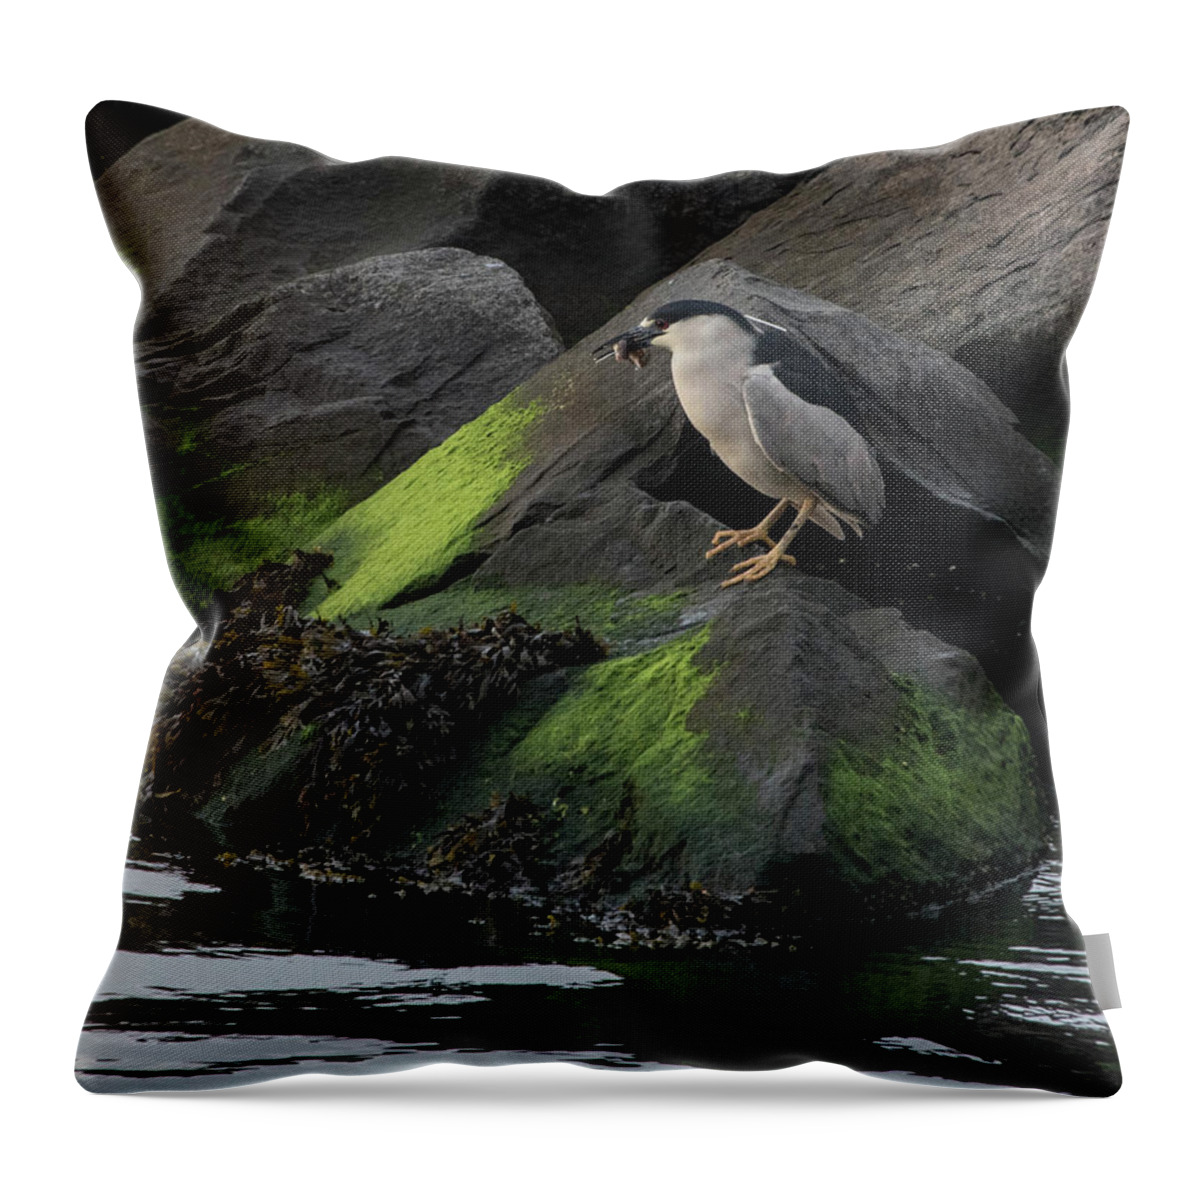 Black Crowned Night Heron Throw Pillow featuring the photograph Black Crowned Night Heron by Alan Goldberg